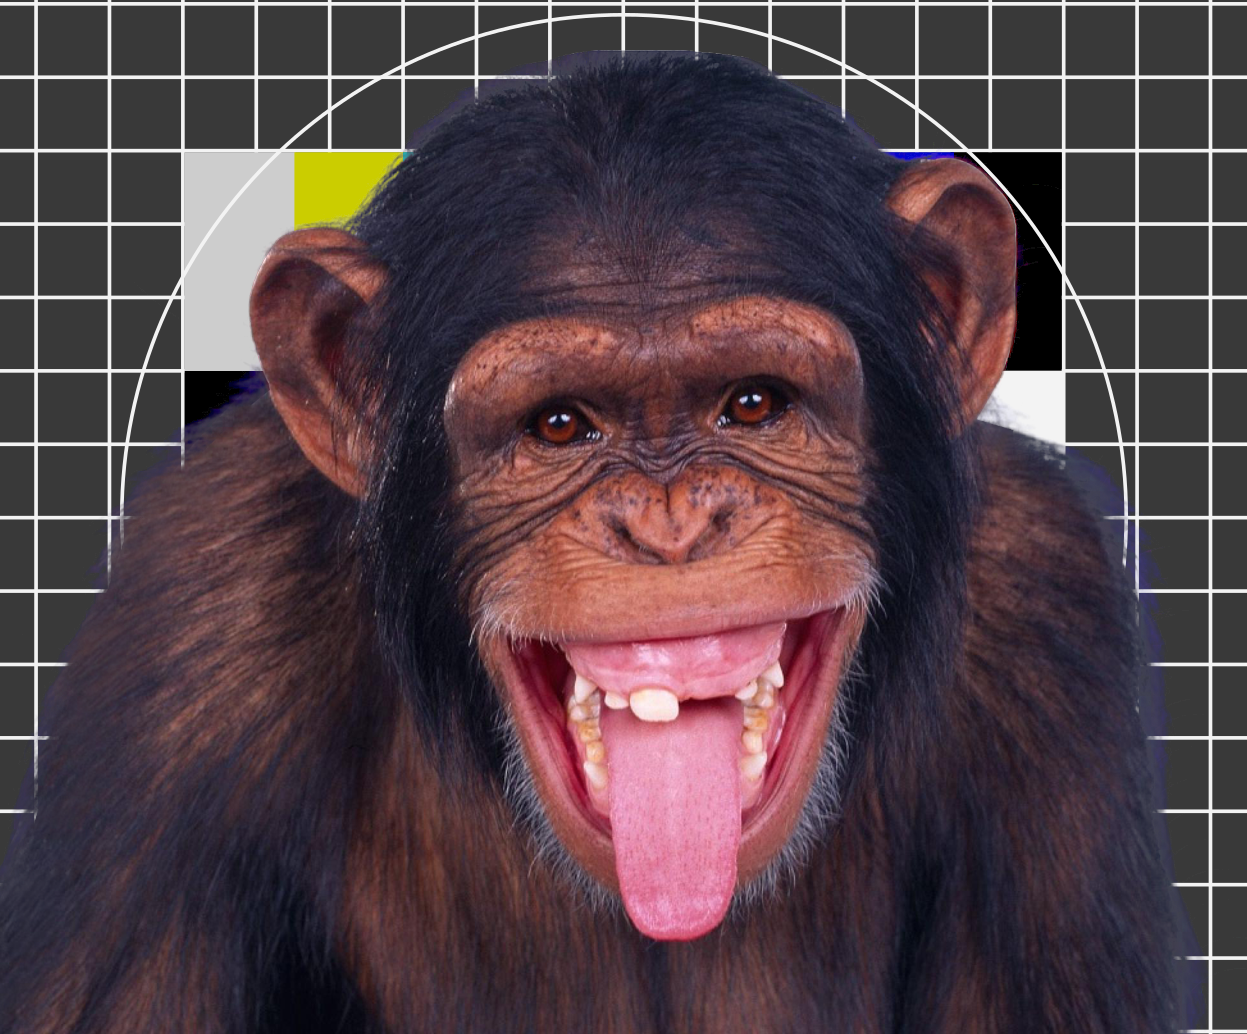 Monkey behind a test image